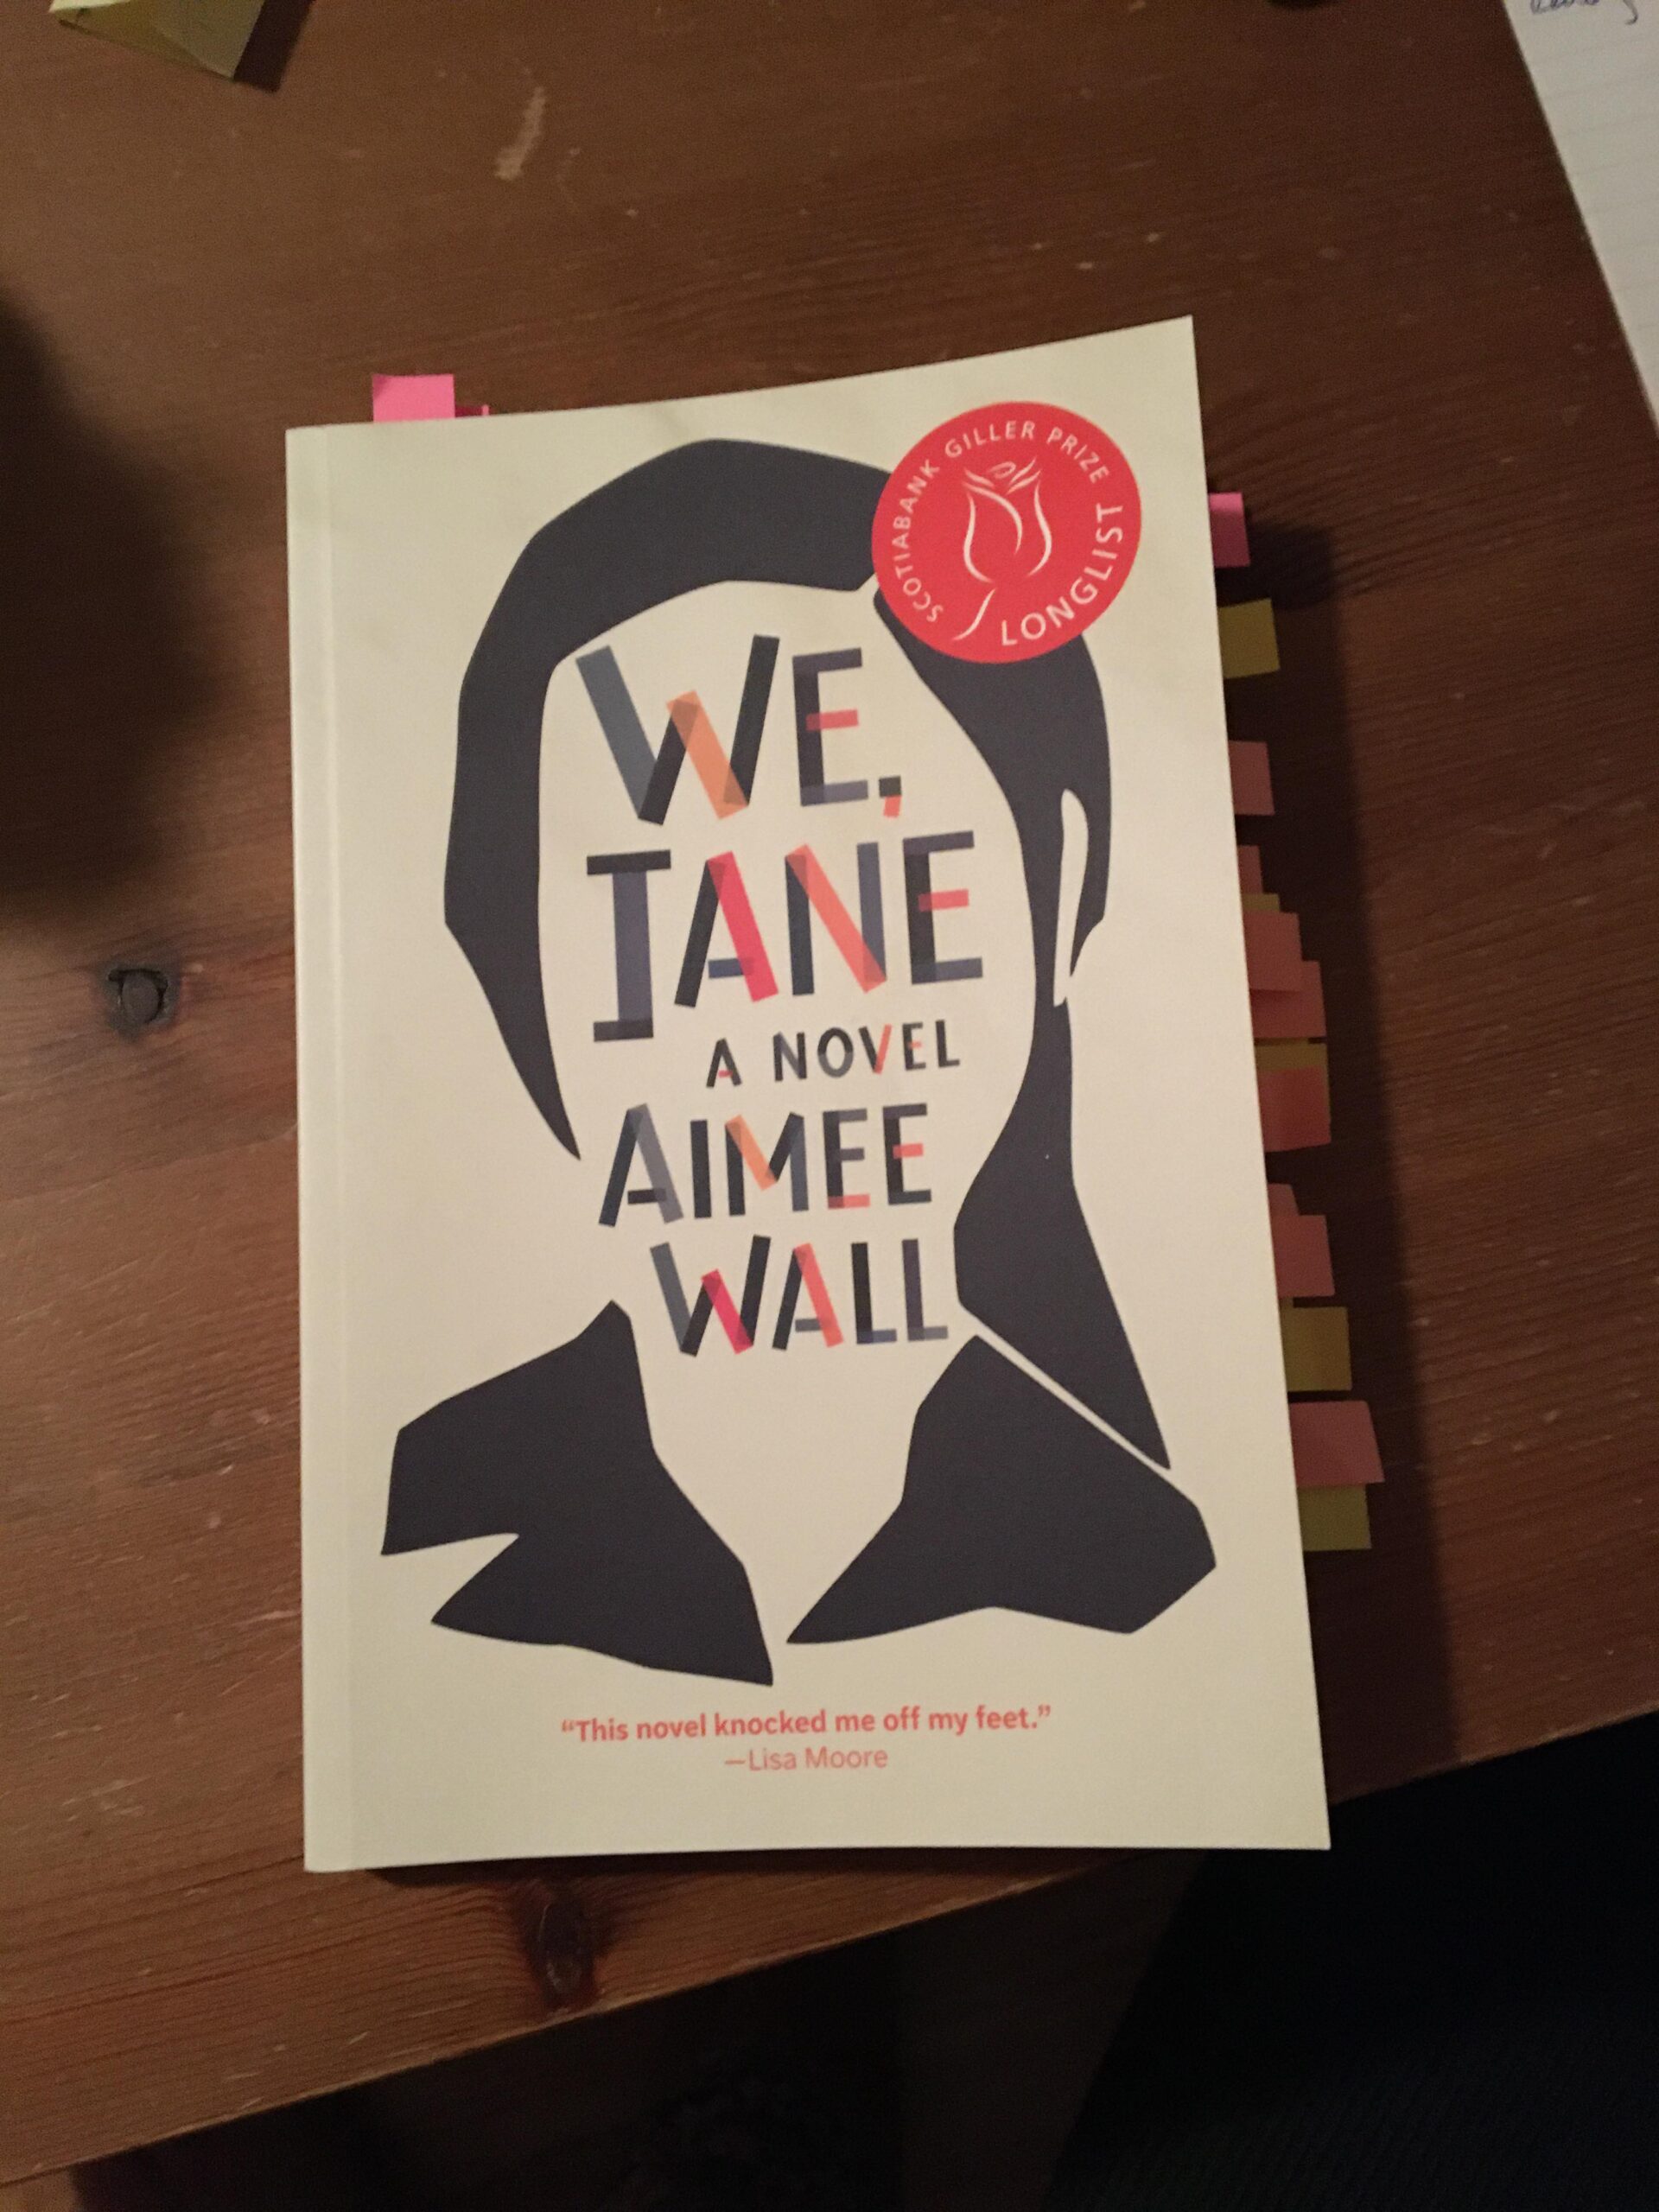 My stickified copy of "We, Jane"